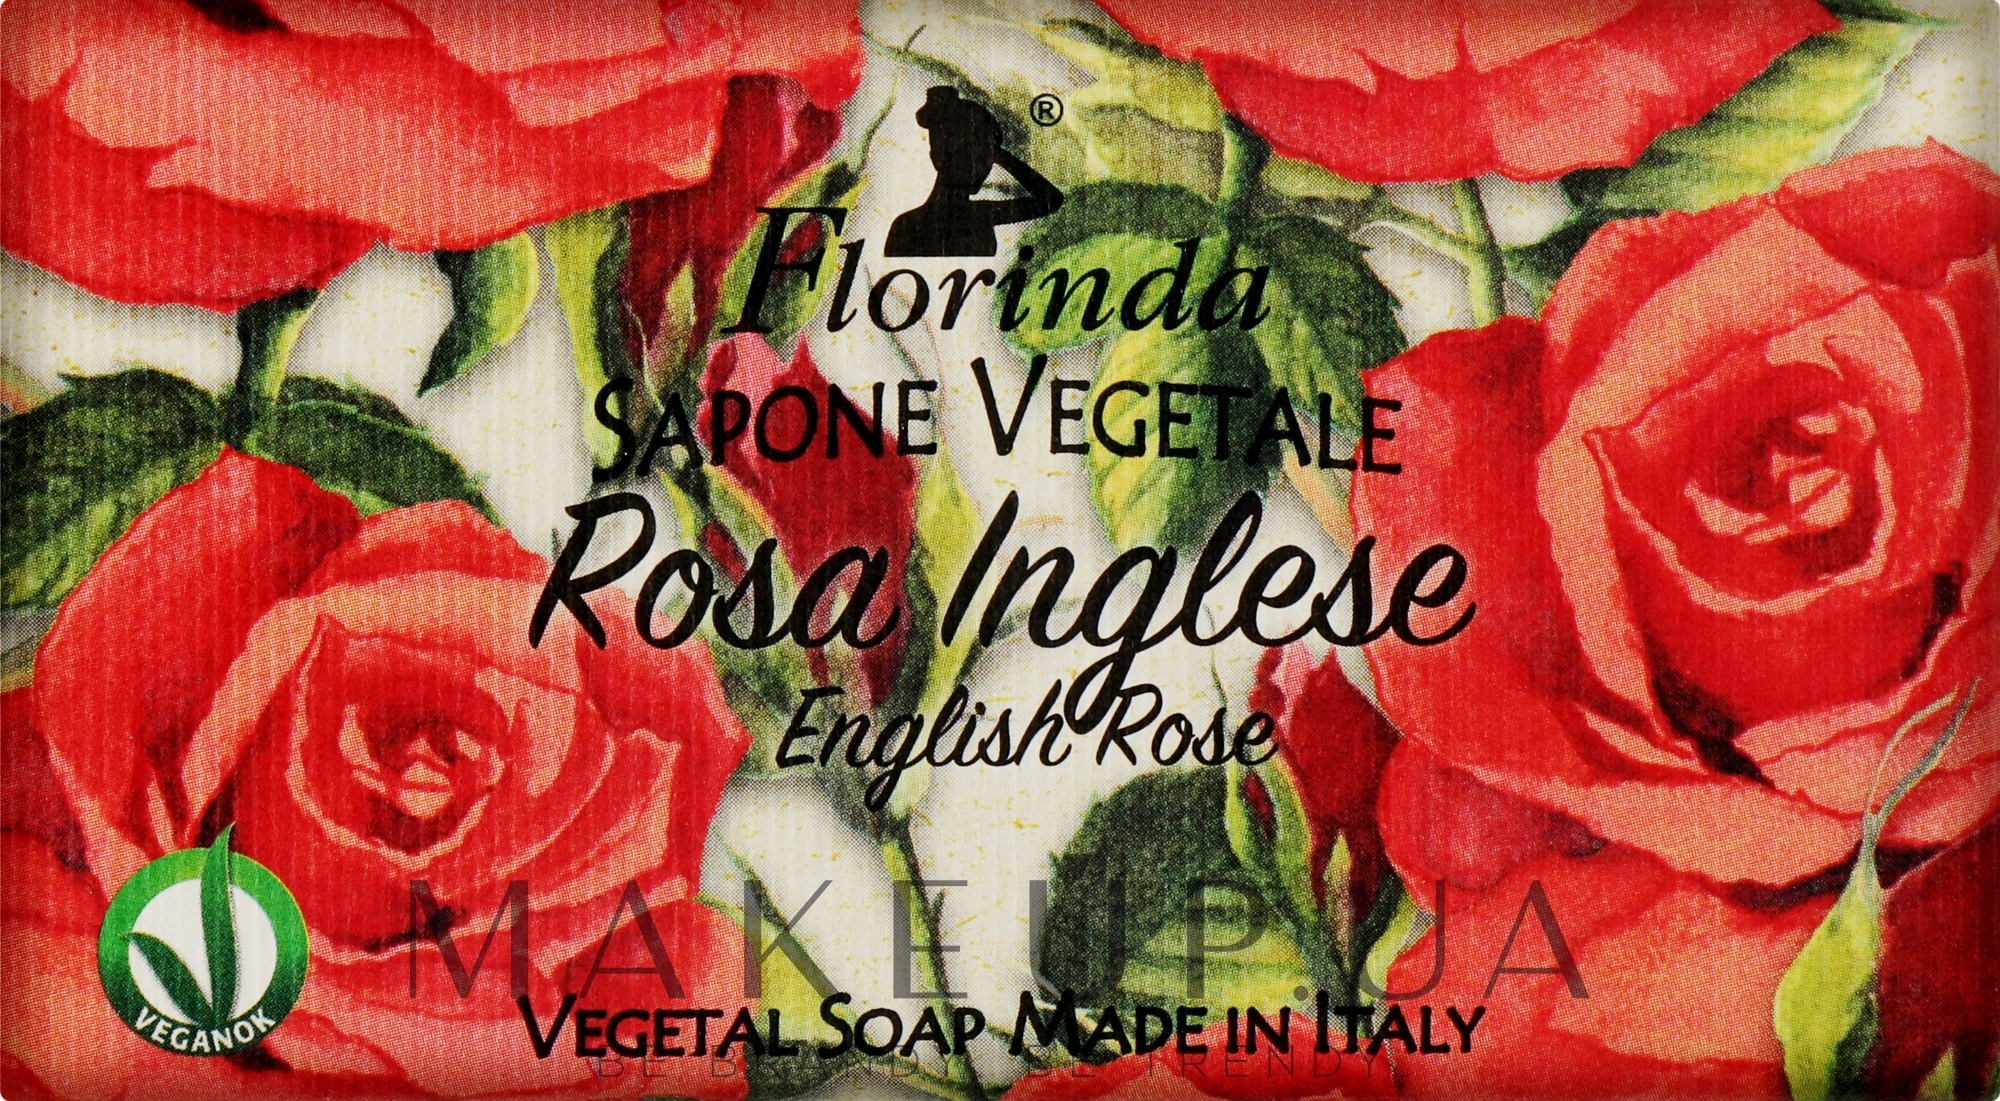 Мило натуральне "Англійська троянда" - Florinda Sapone Vegetale English Rose — фото 100g